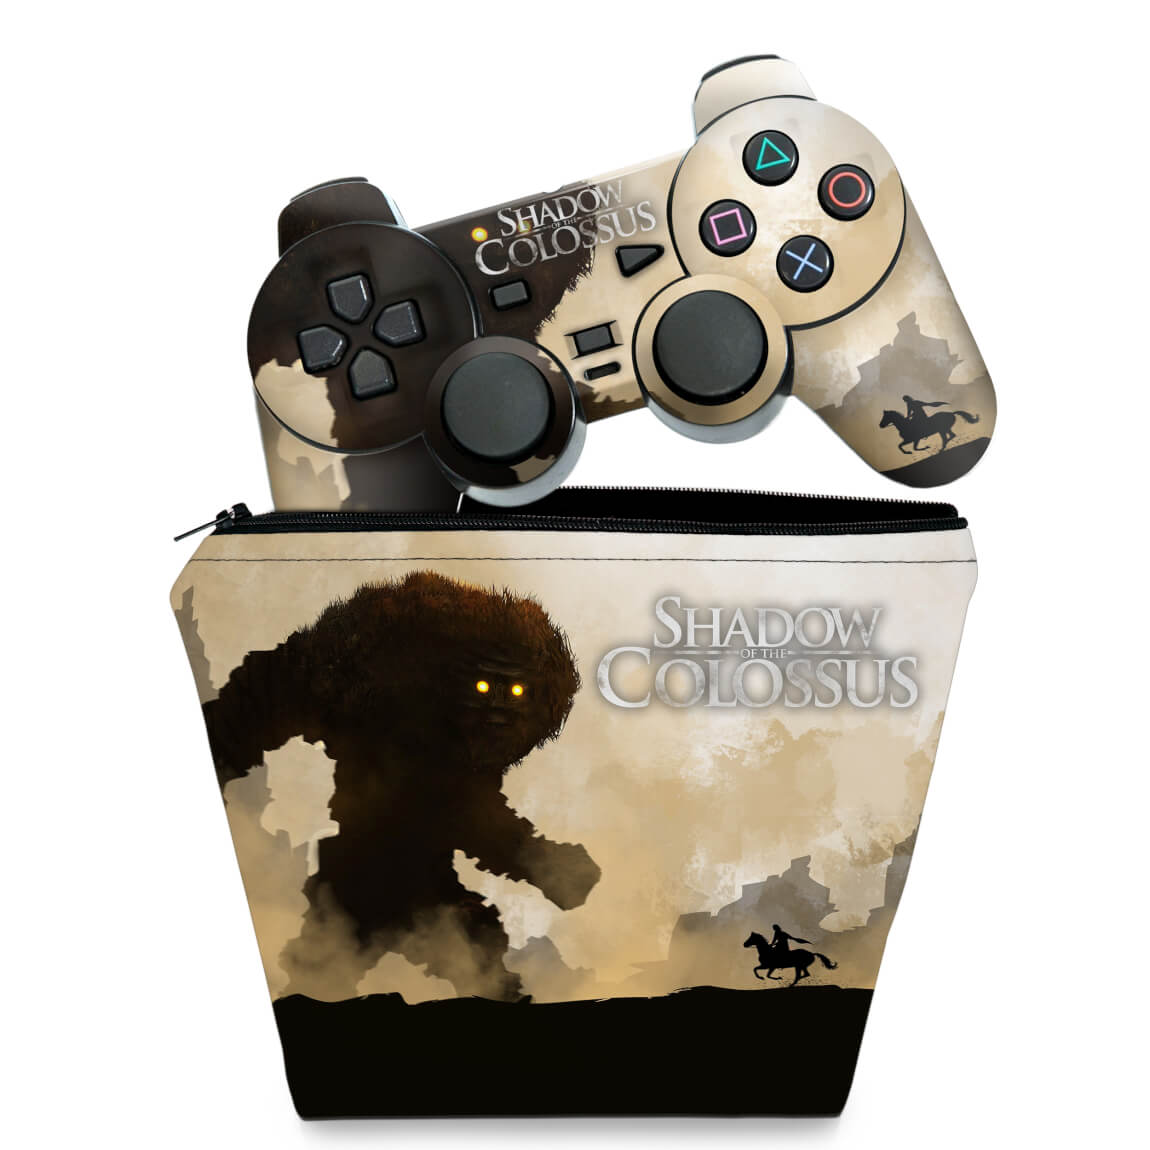 Shadow of the Colossus, PS2 vs PS3 vs PS4 vs PS4 Pro vs PS5